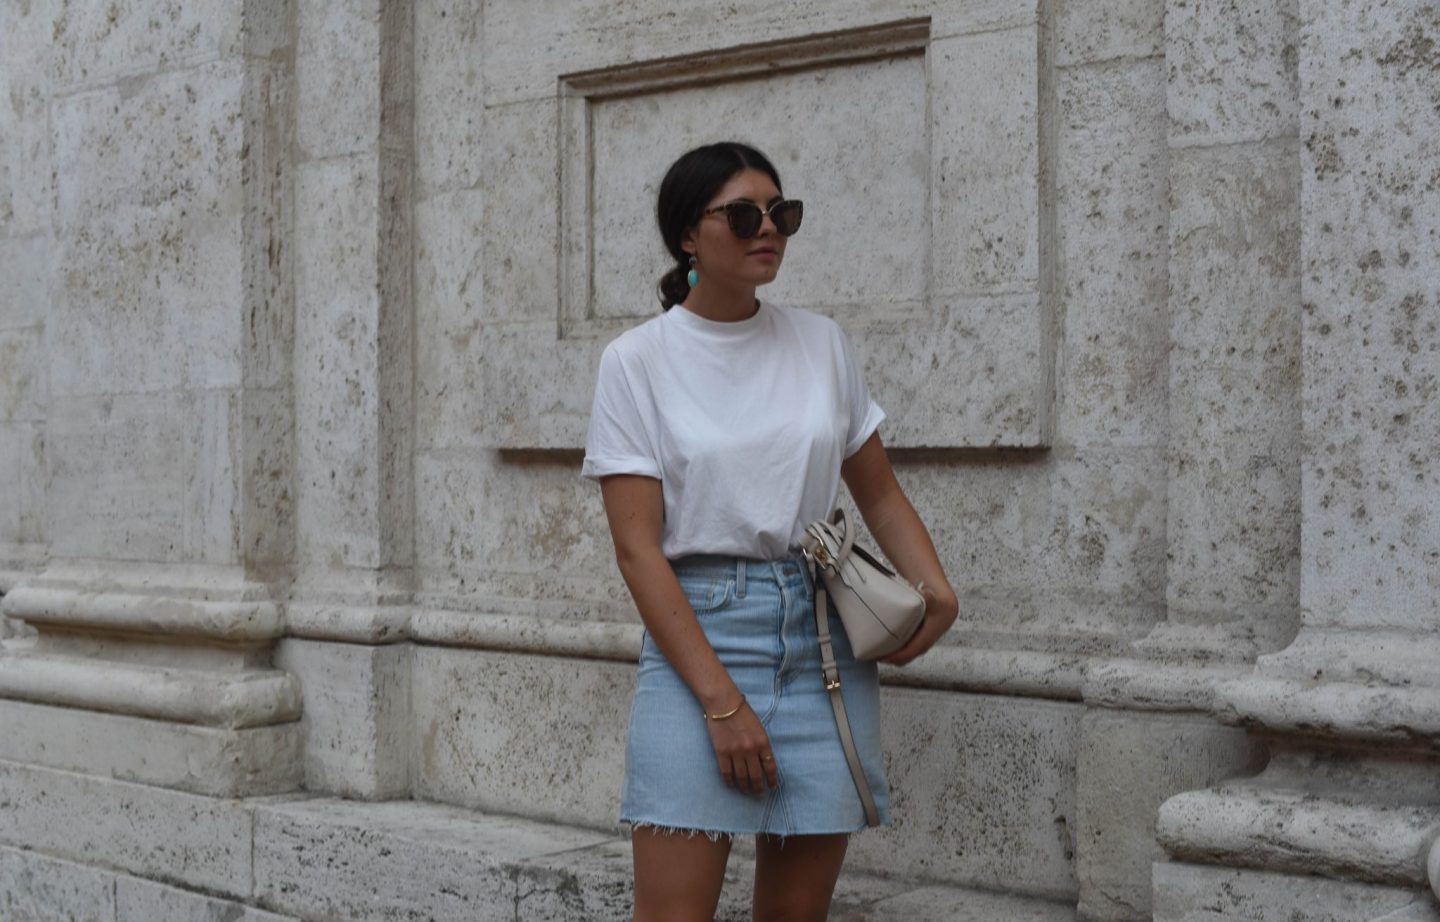 Perugia, Italy - just basics - denim skirt x white shirt